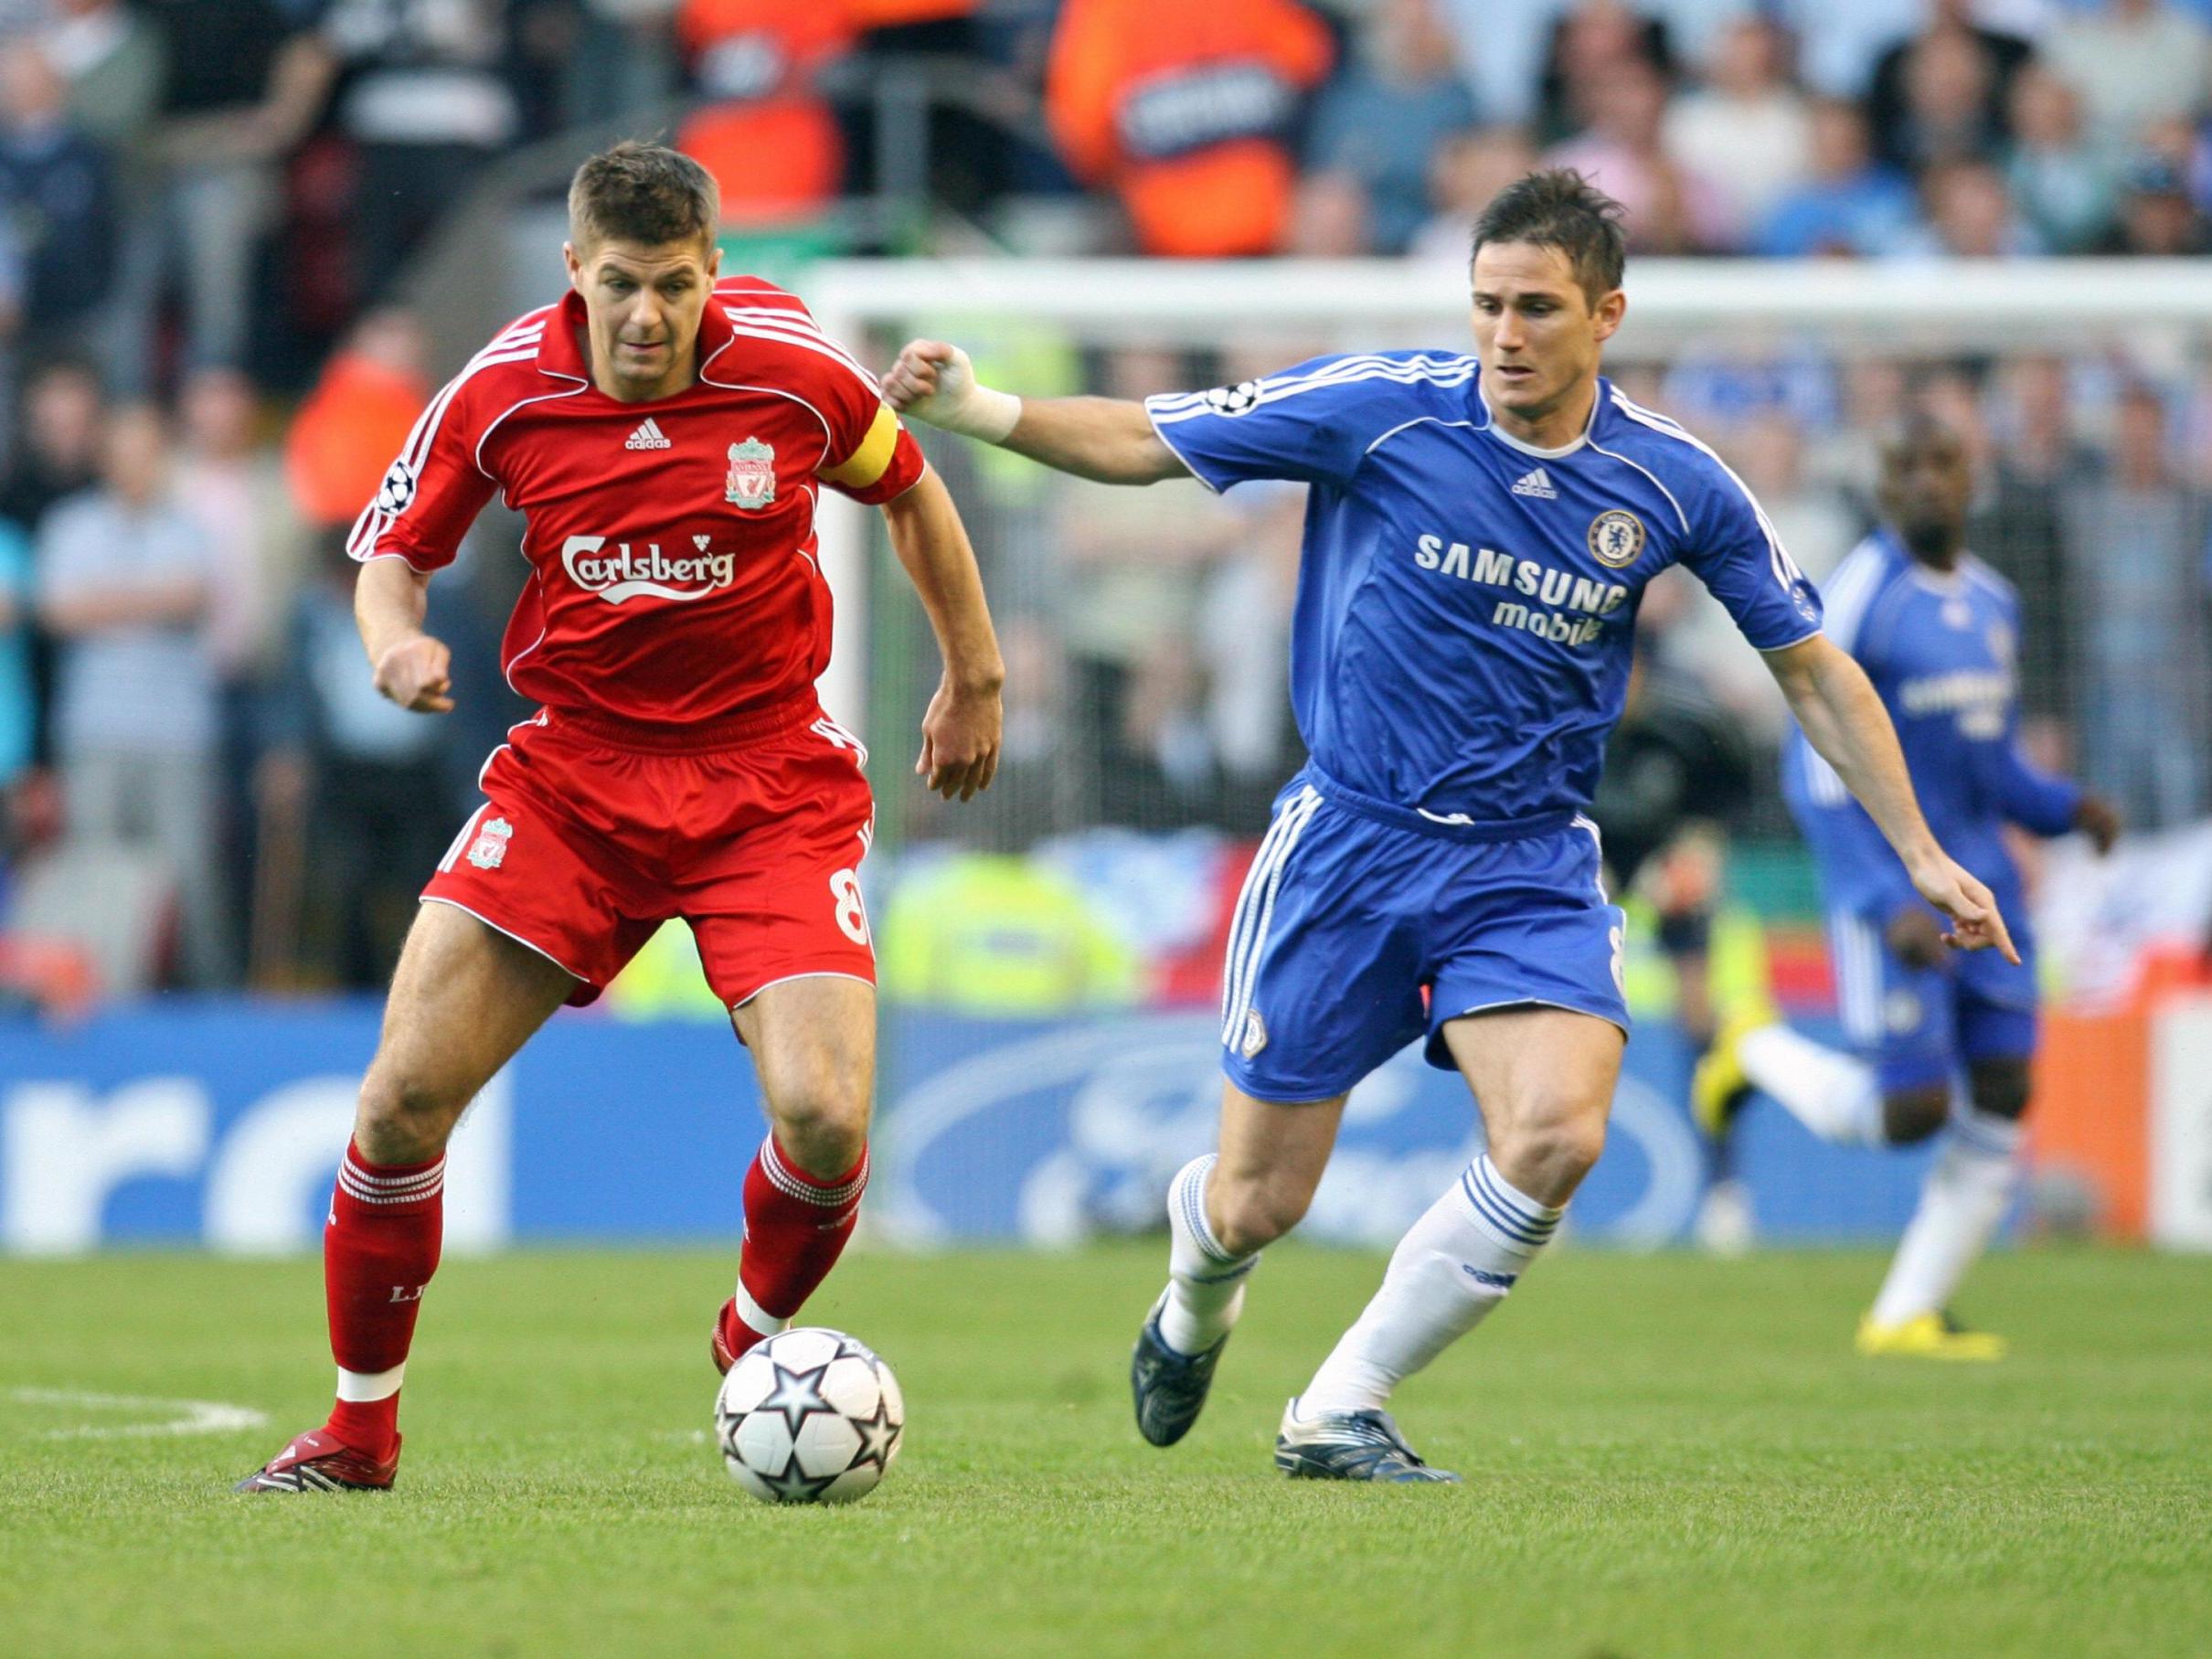 Steven Gerrard and Frank Lampard in the 2007 Champions League semi-final